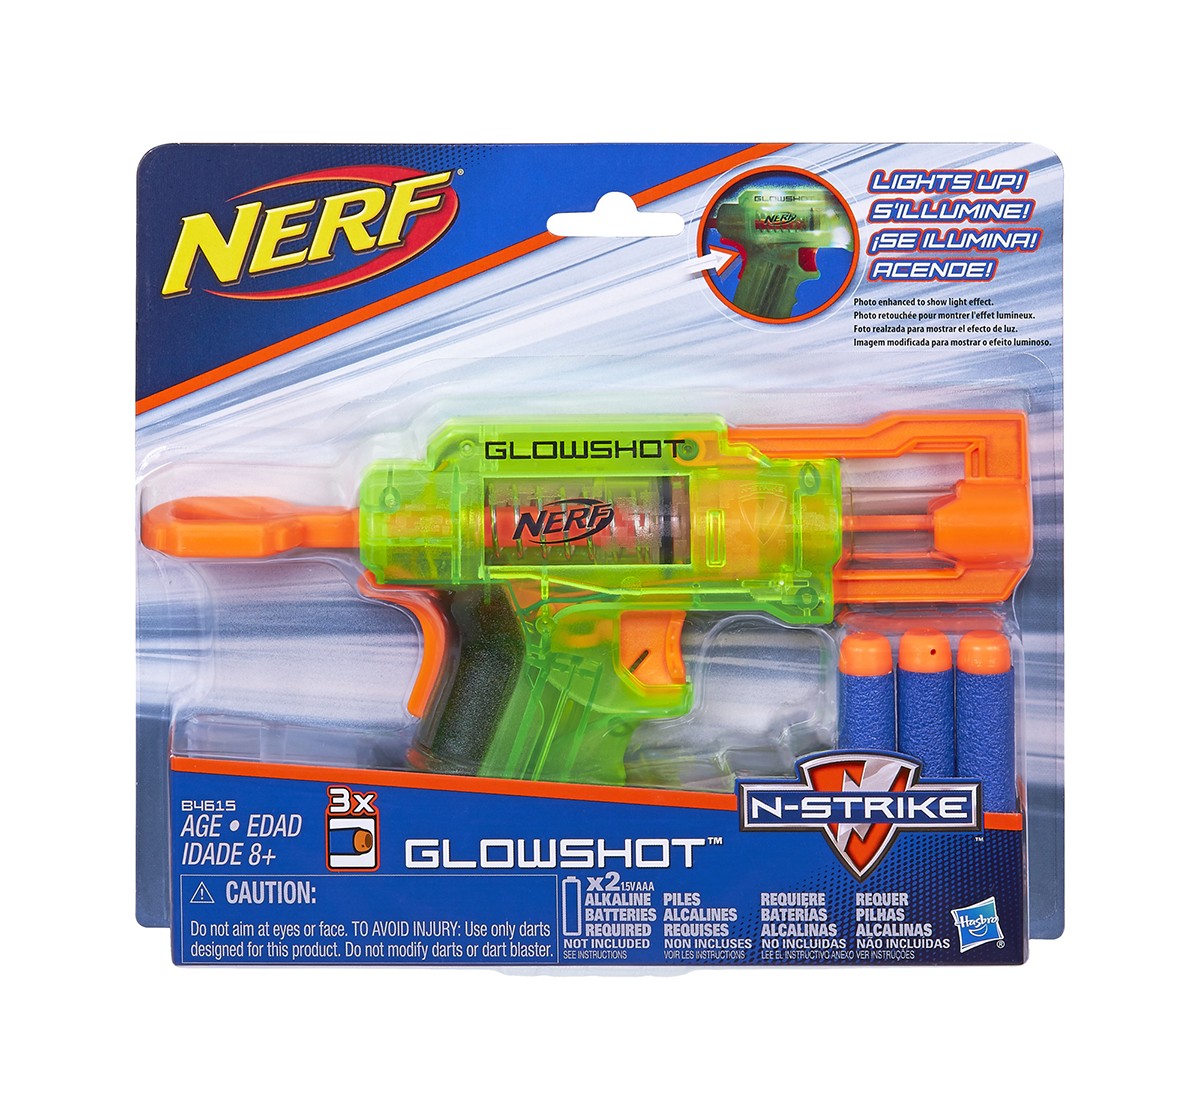 Nerf NSTRIKE GLOWSHOT Blasters for age 8Y+ 